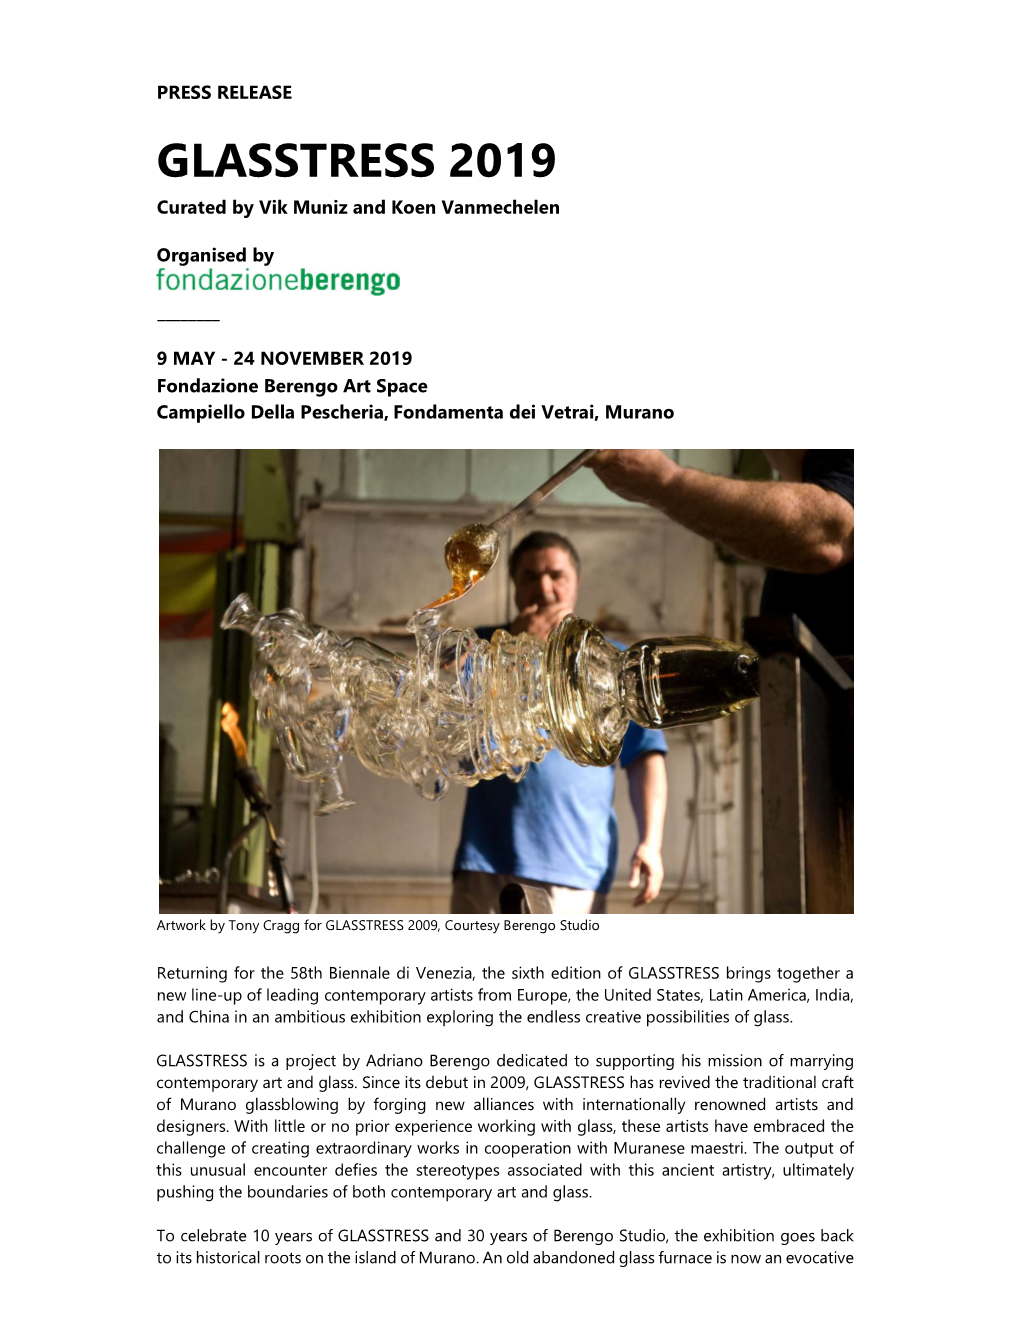 GLASSTRESS 2019 Curated by Vik Muniz and Koen Vanmechelen